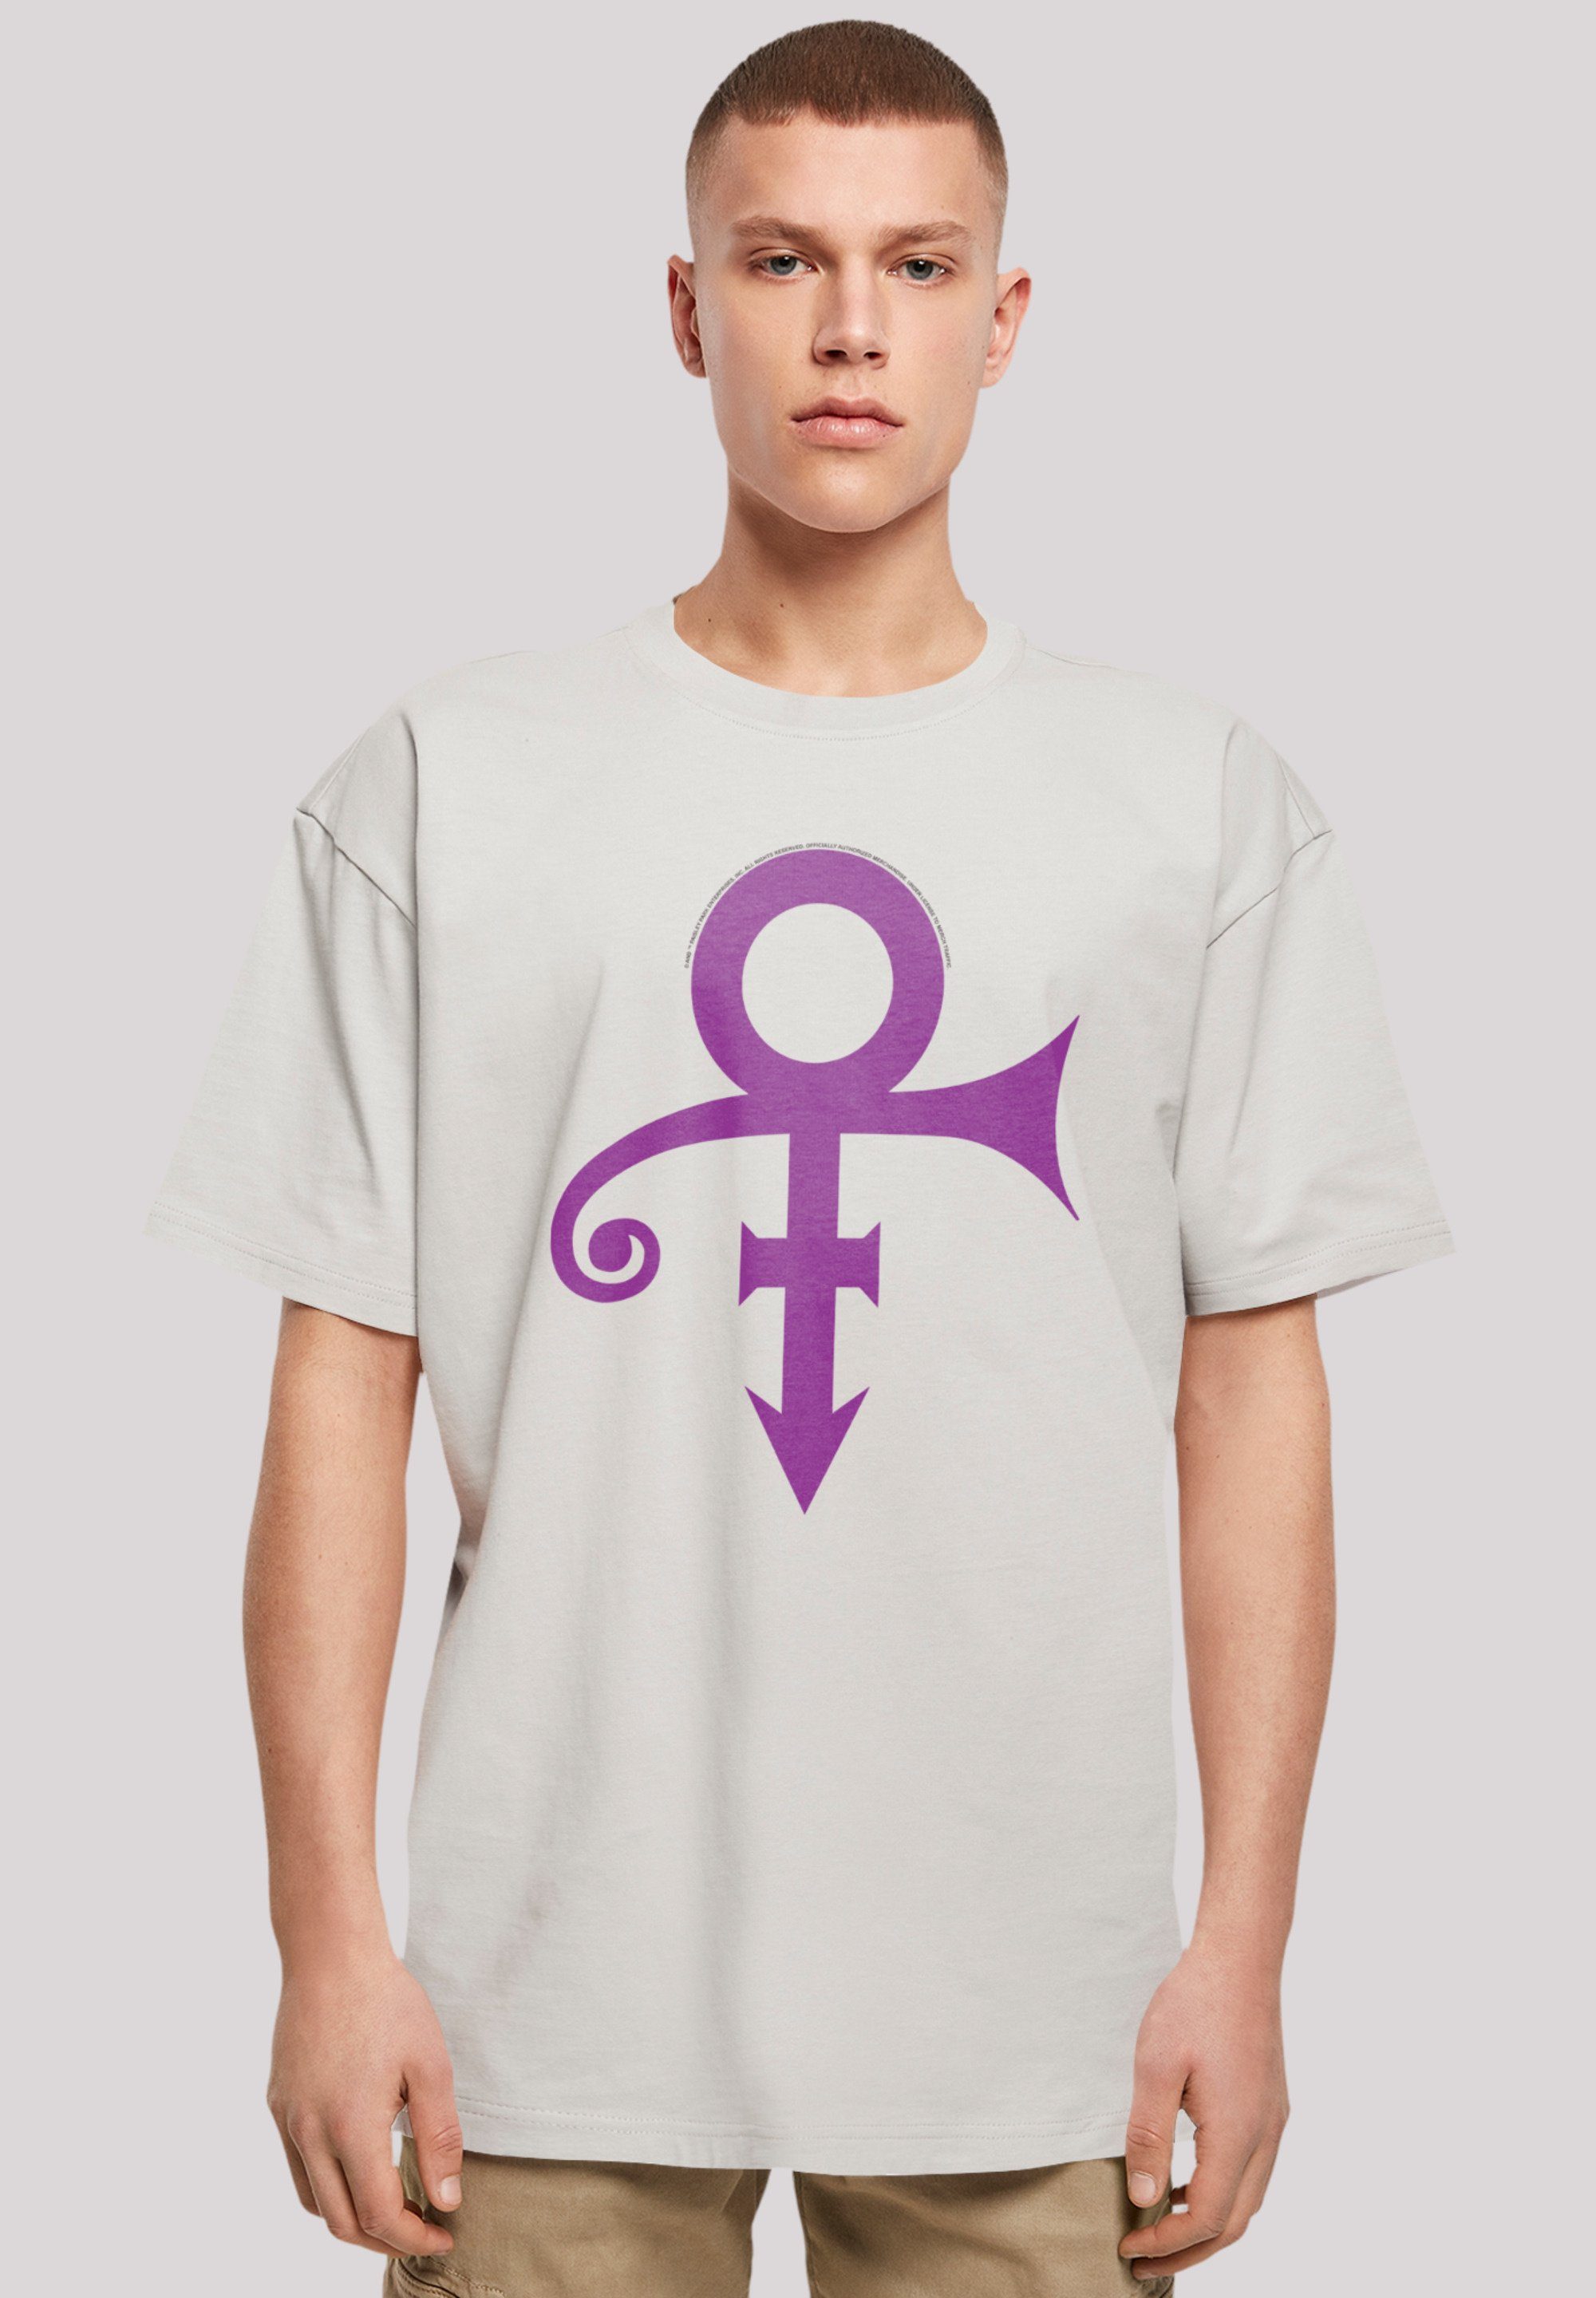 Band Rock-Musik, Album Musik Logo F4NT4STIC T-Shirt Prince Premium Qualität,